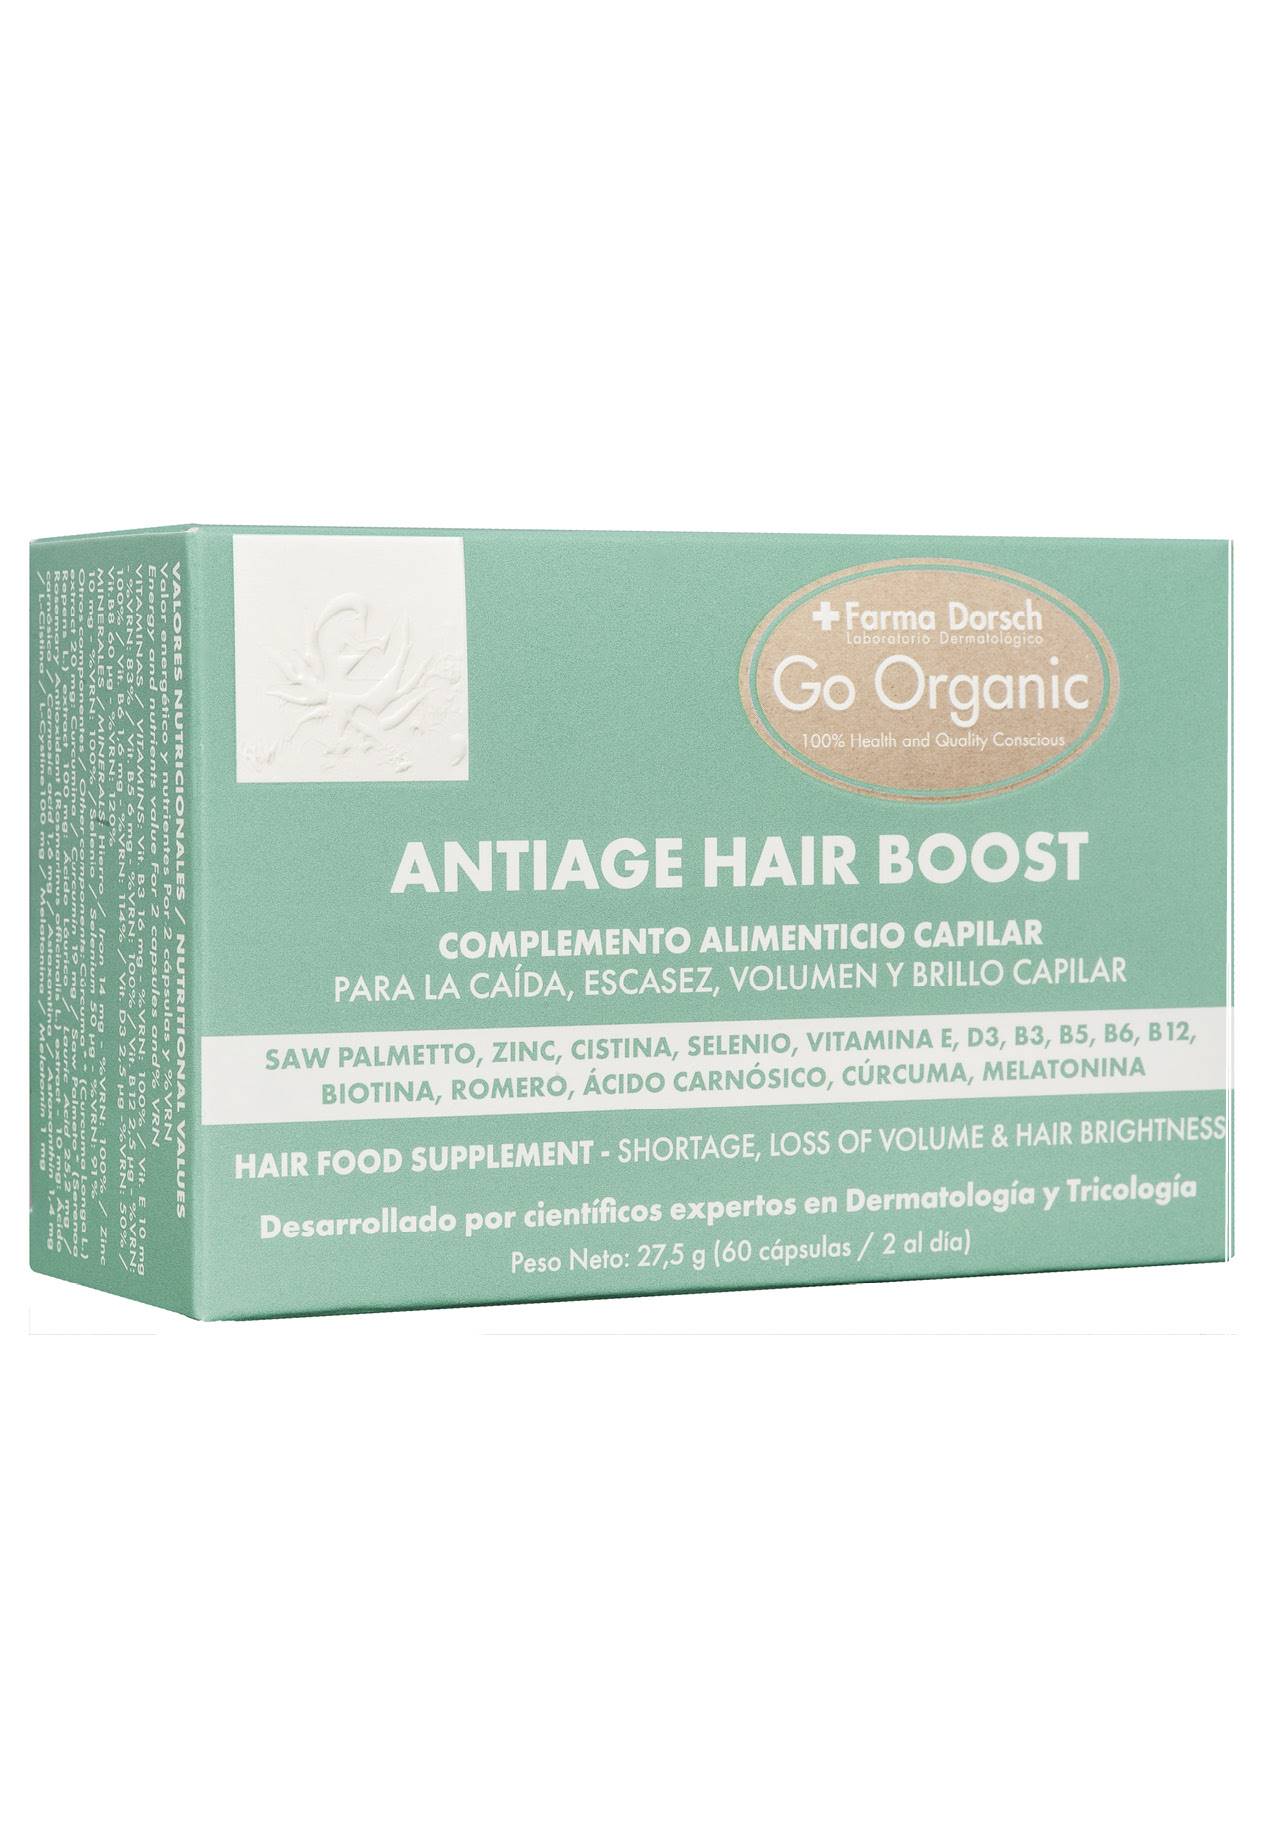 Complemento alimenticio Antiage Hair Boost Go Organic de Farma Dorsch Vitaminas para el pelo